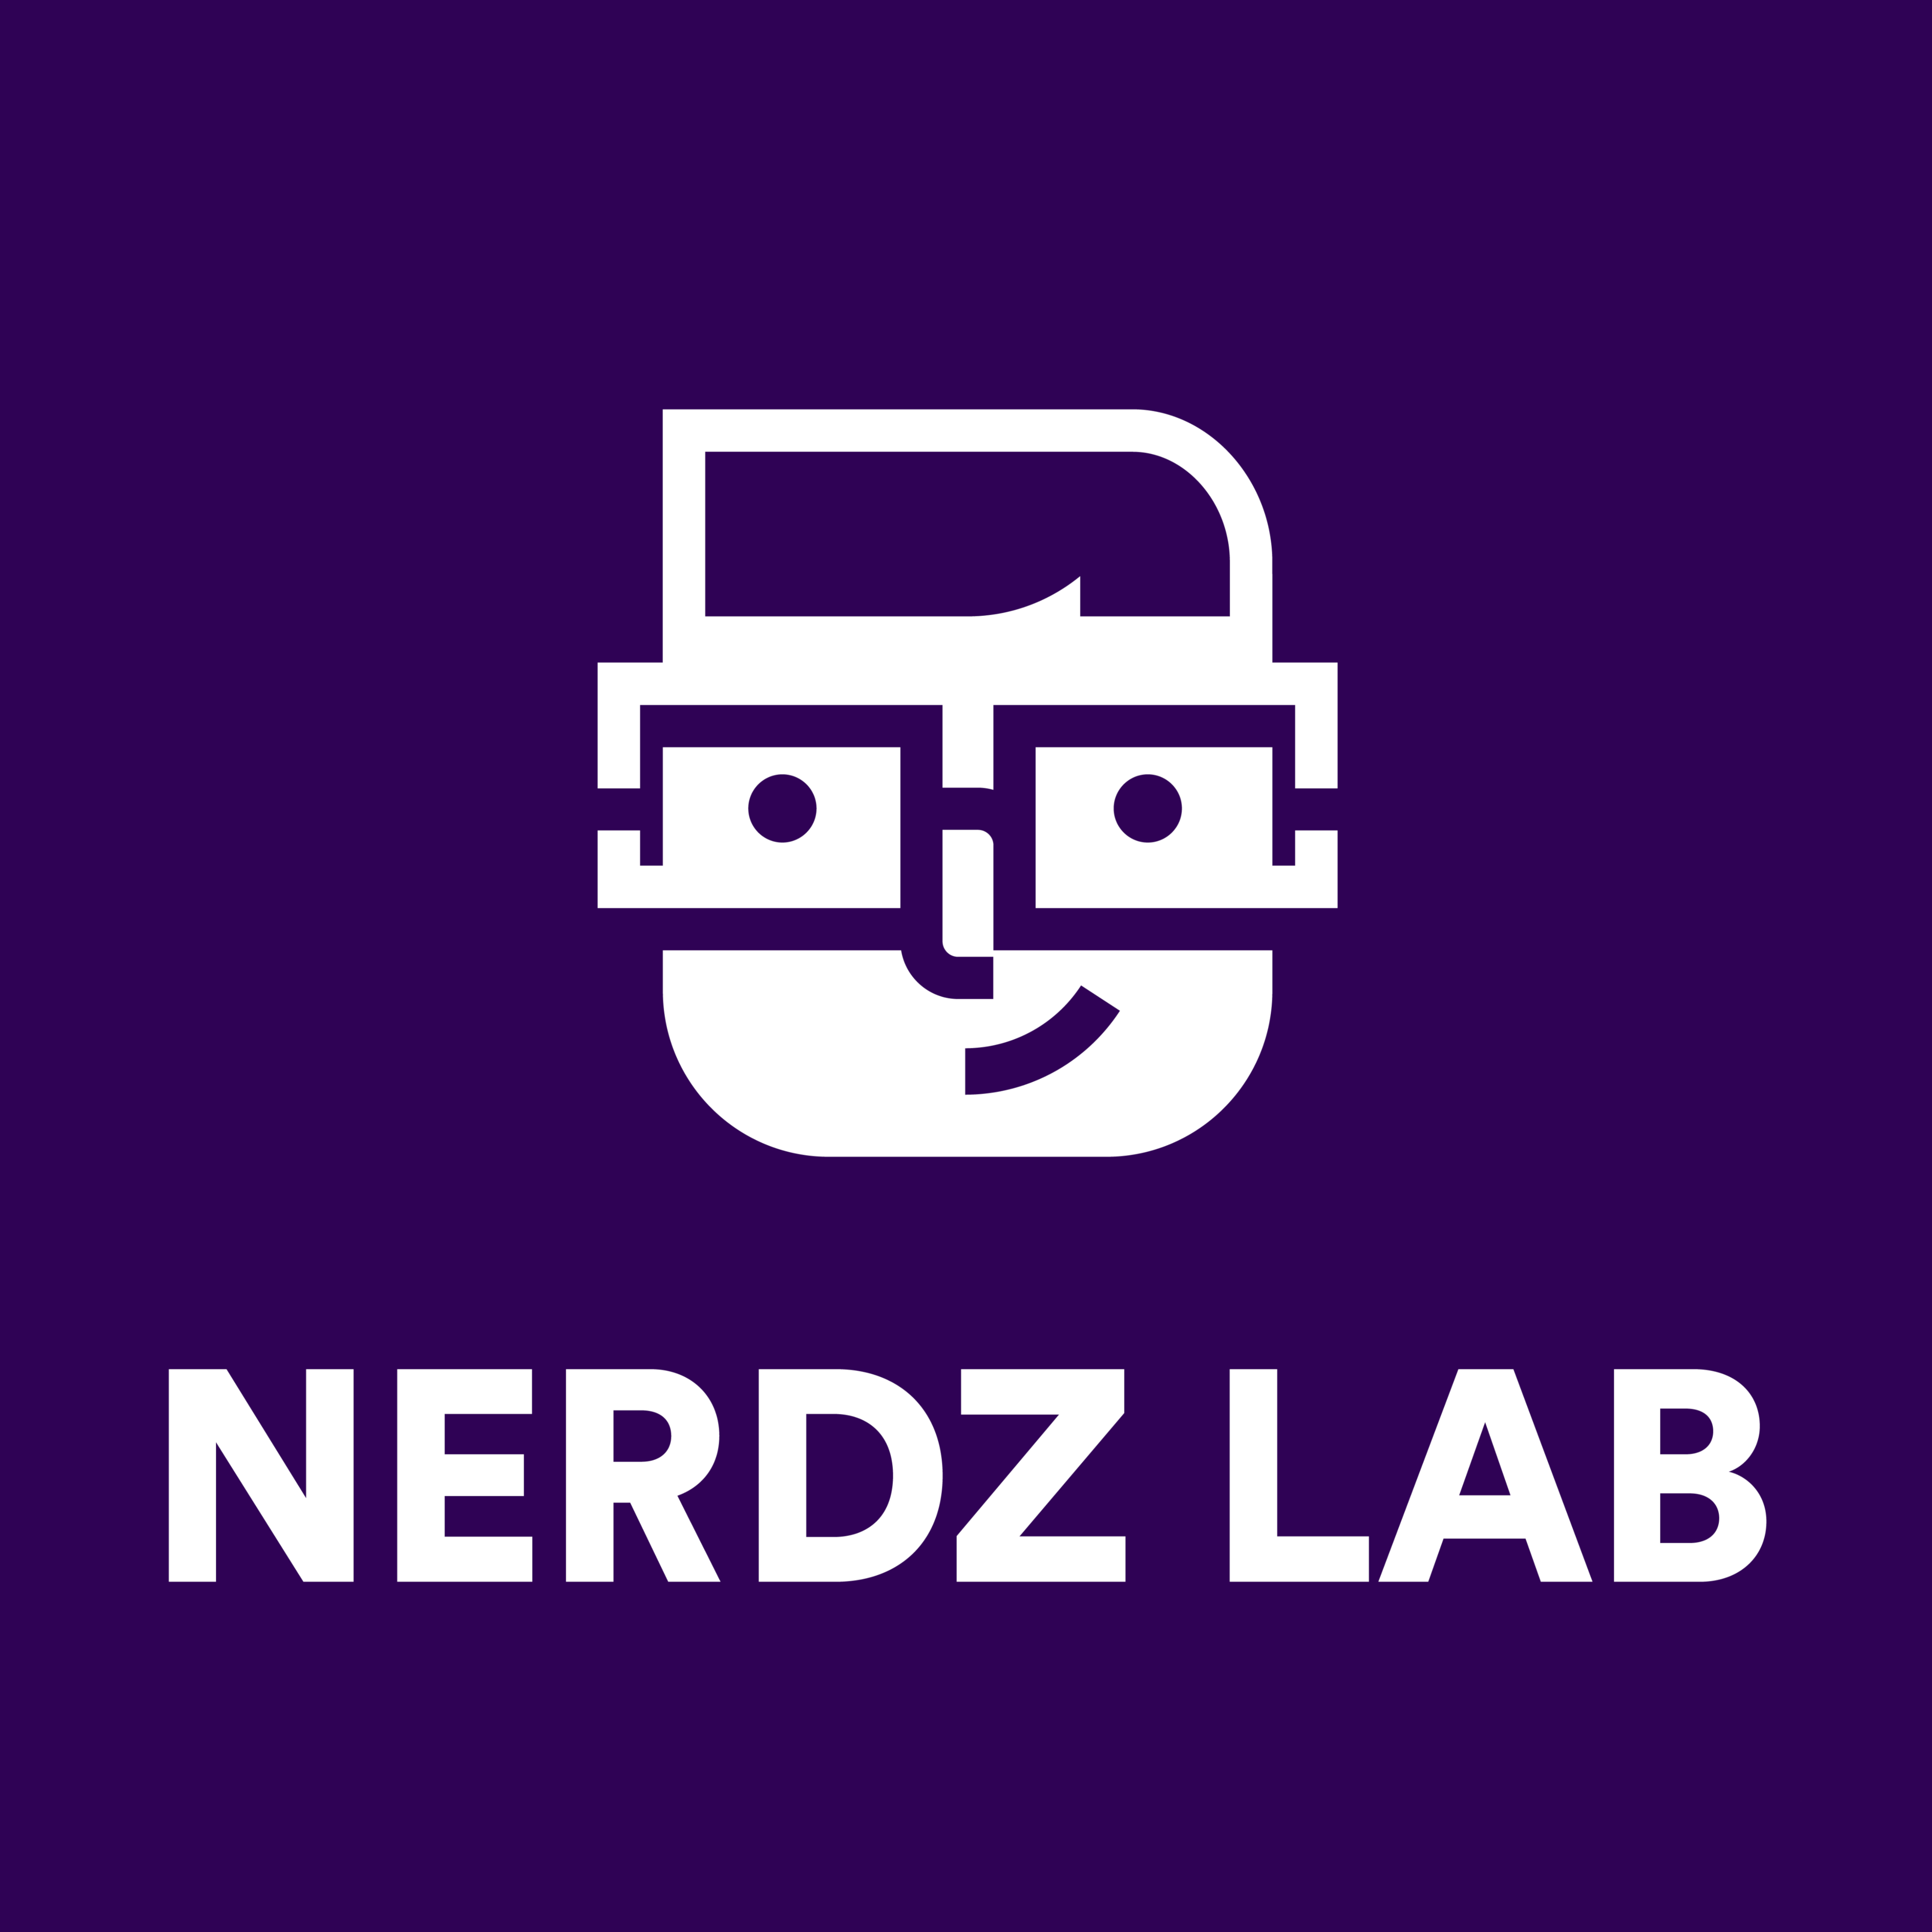 Nerdz Lab company logo